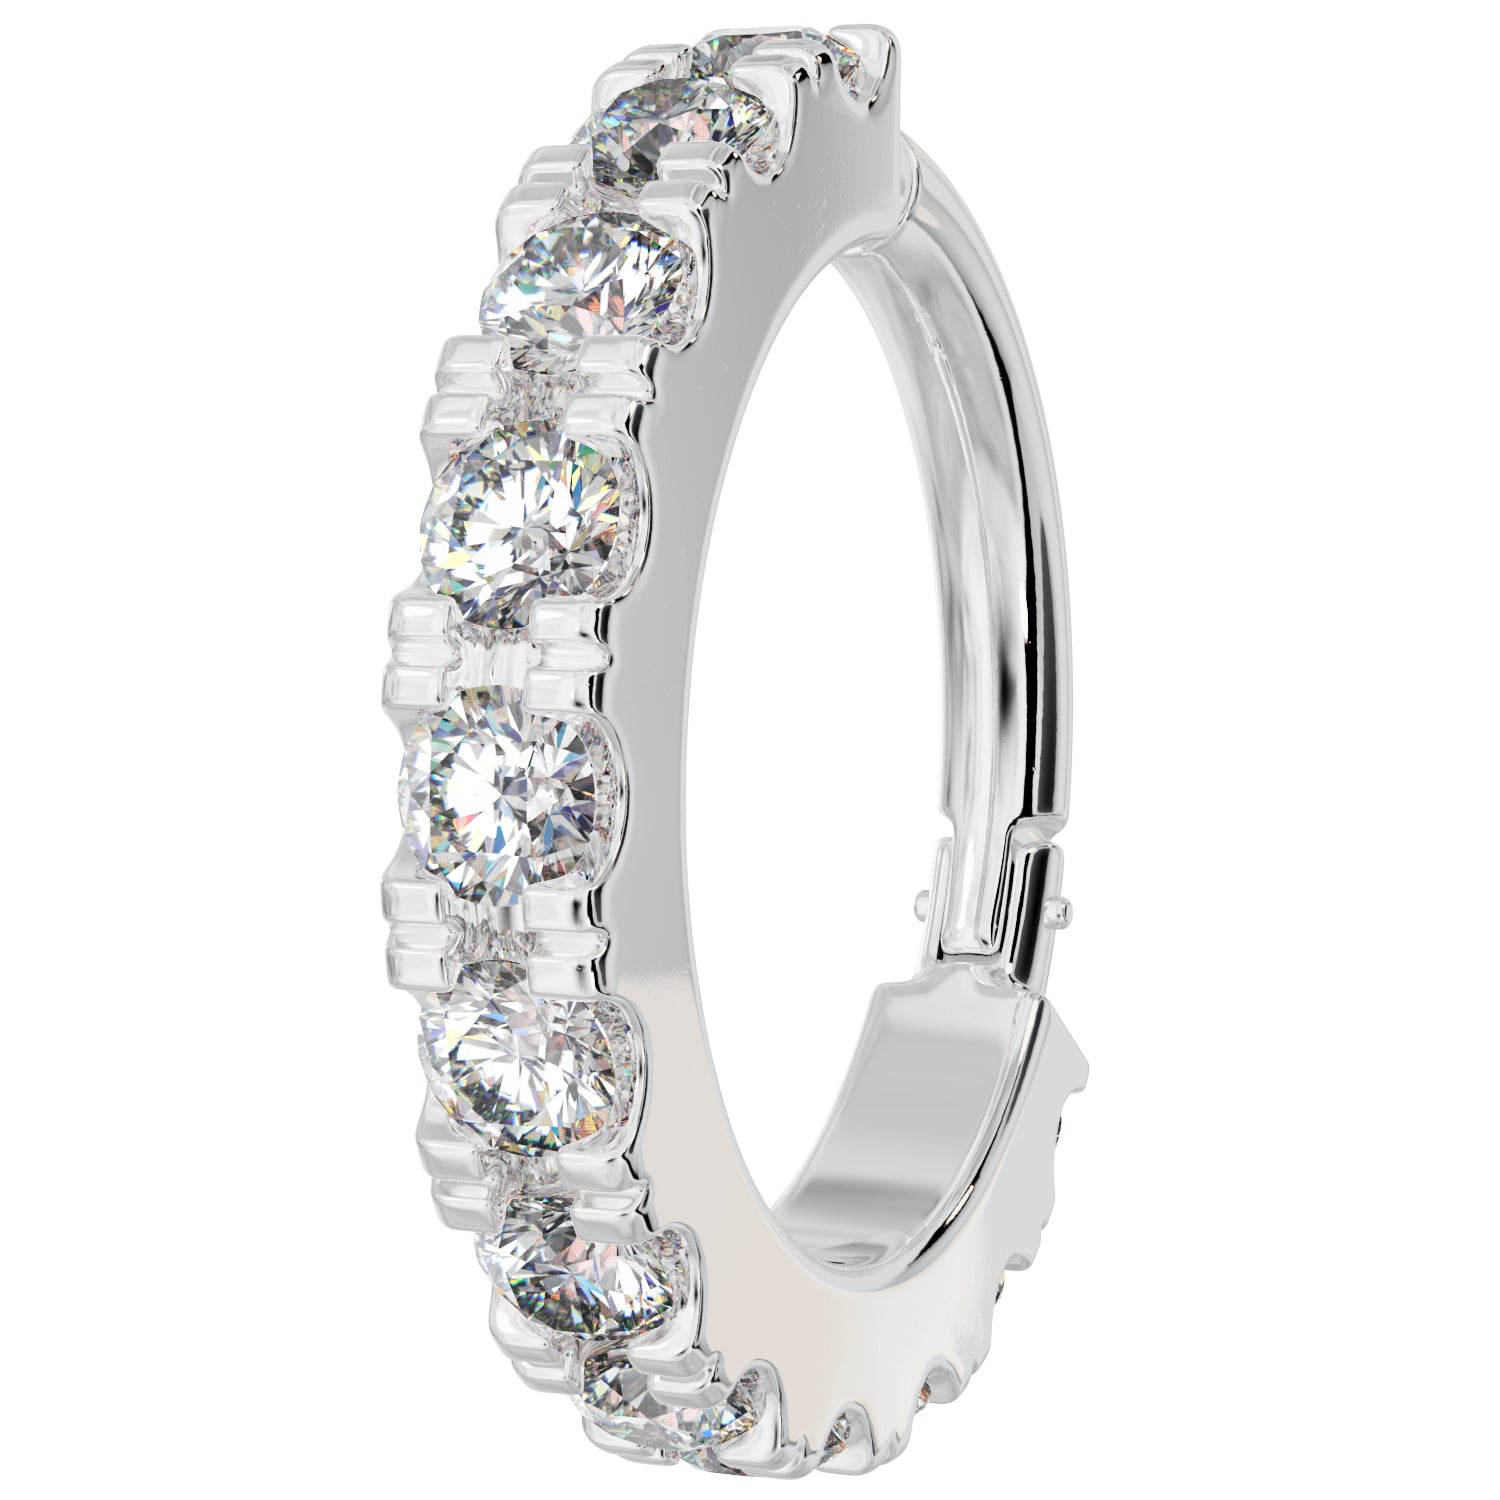 Diamond Infinity Cartilage Earring 14k Gold Clicker Ring-14K White Gold   16G (1.2mm)   3 8